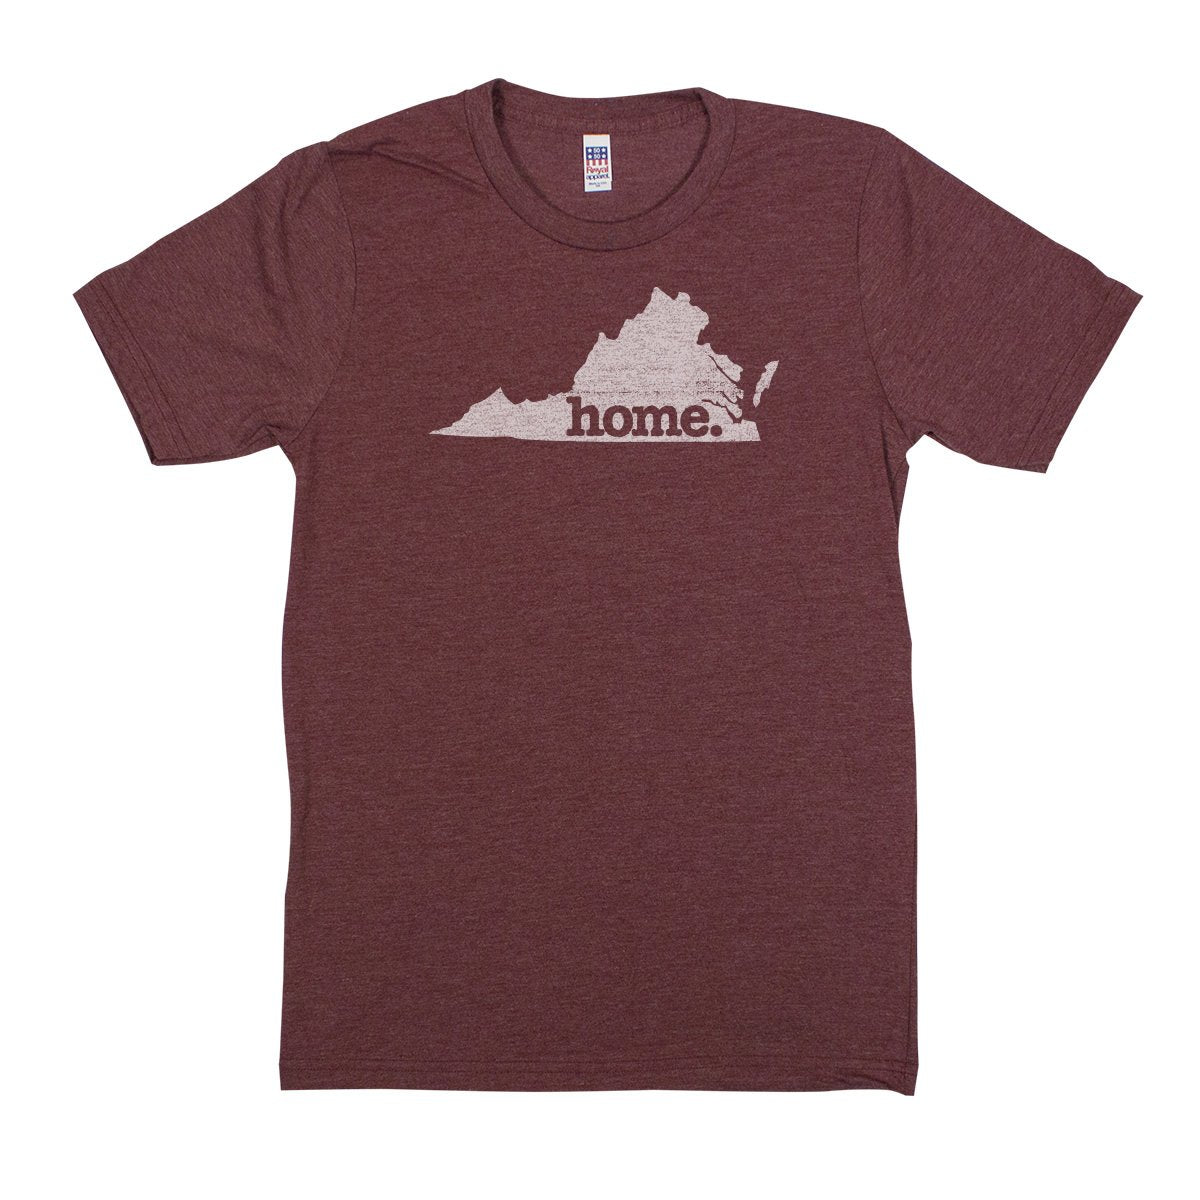 home. Men’s Unisex T-Shirt - Georgia